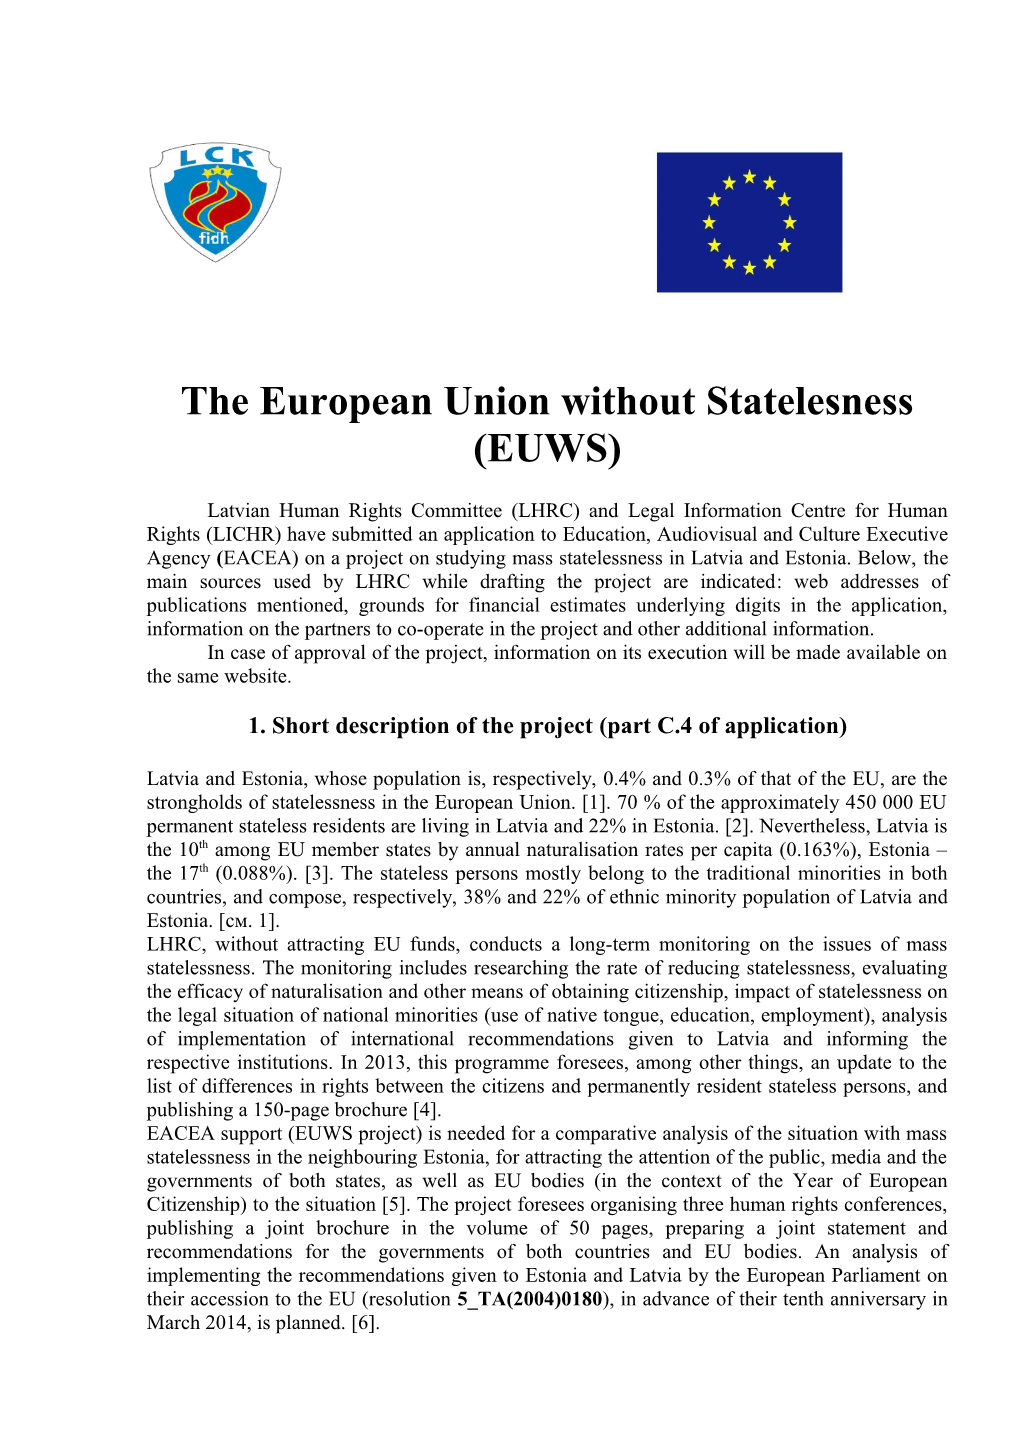 The European Union Without Statelesness (EUWS)